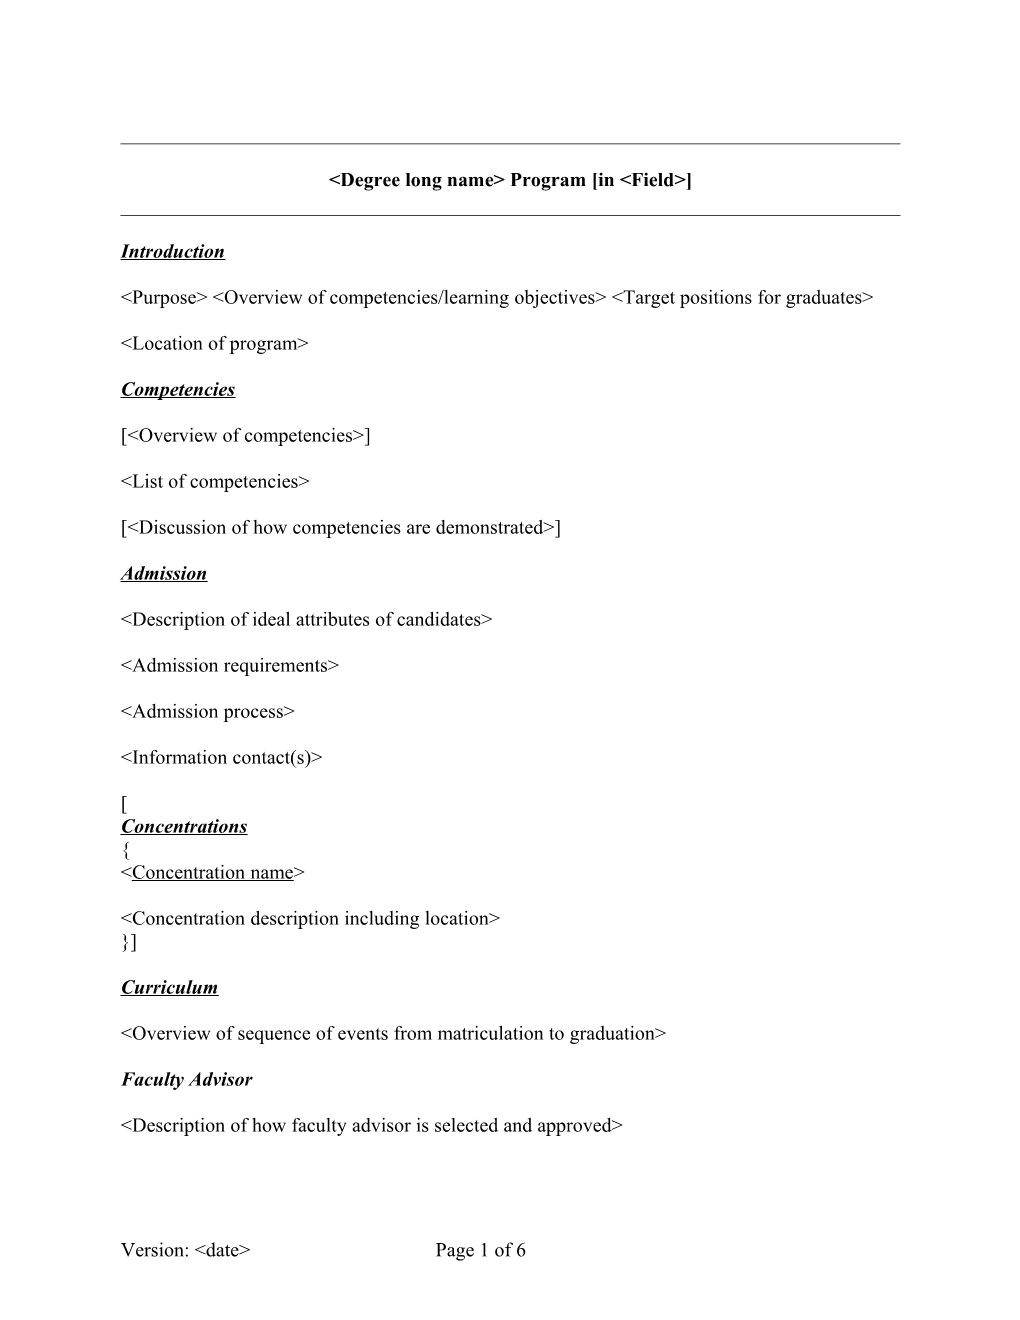 Program and Curriculum Template, Version 2